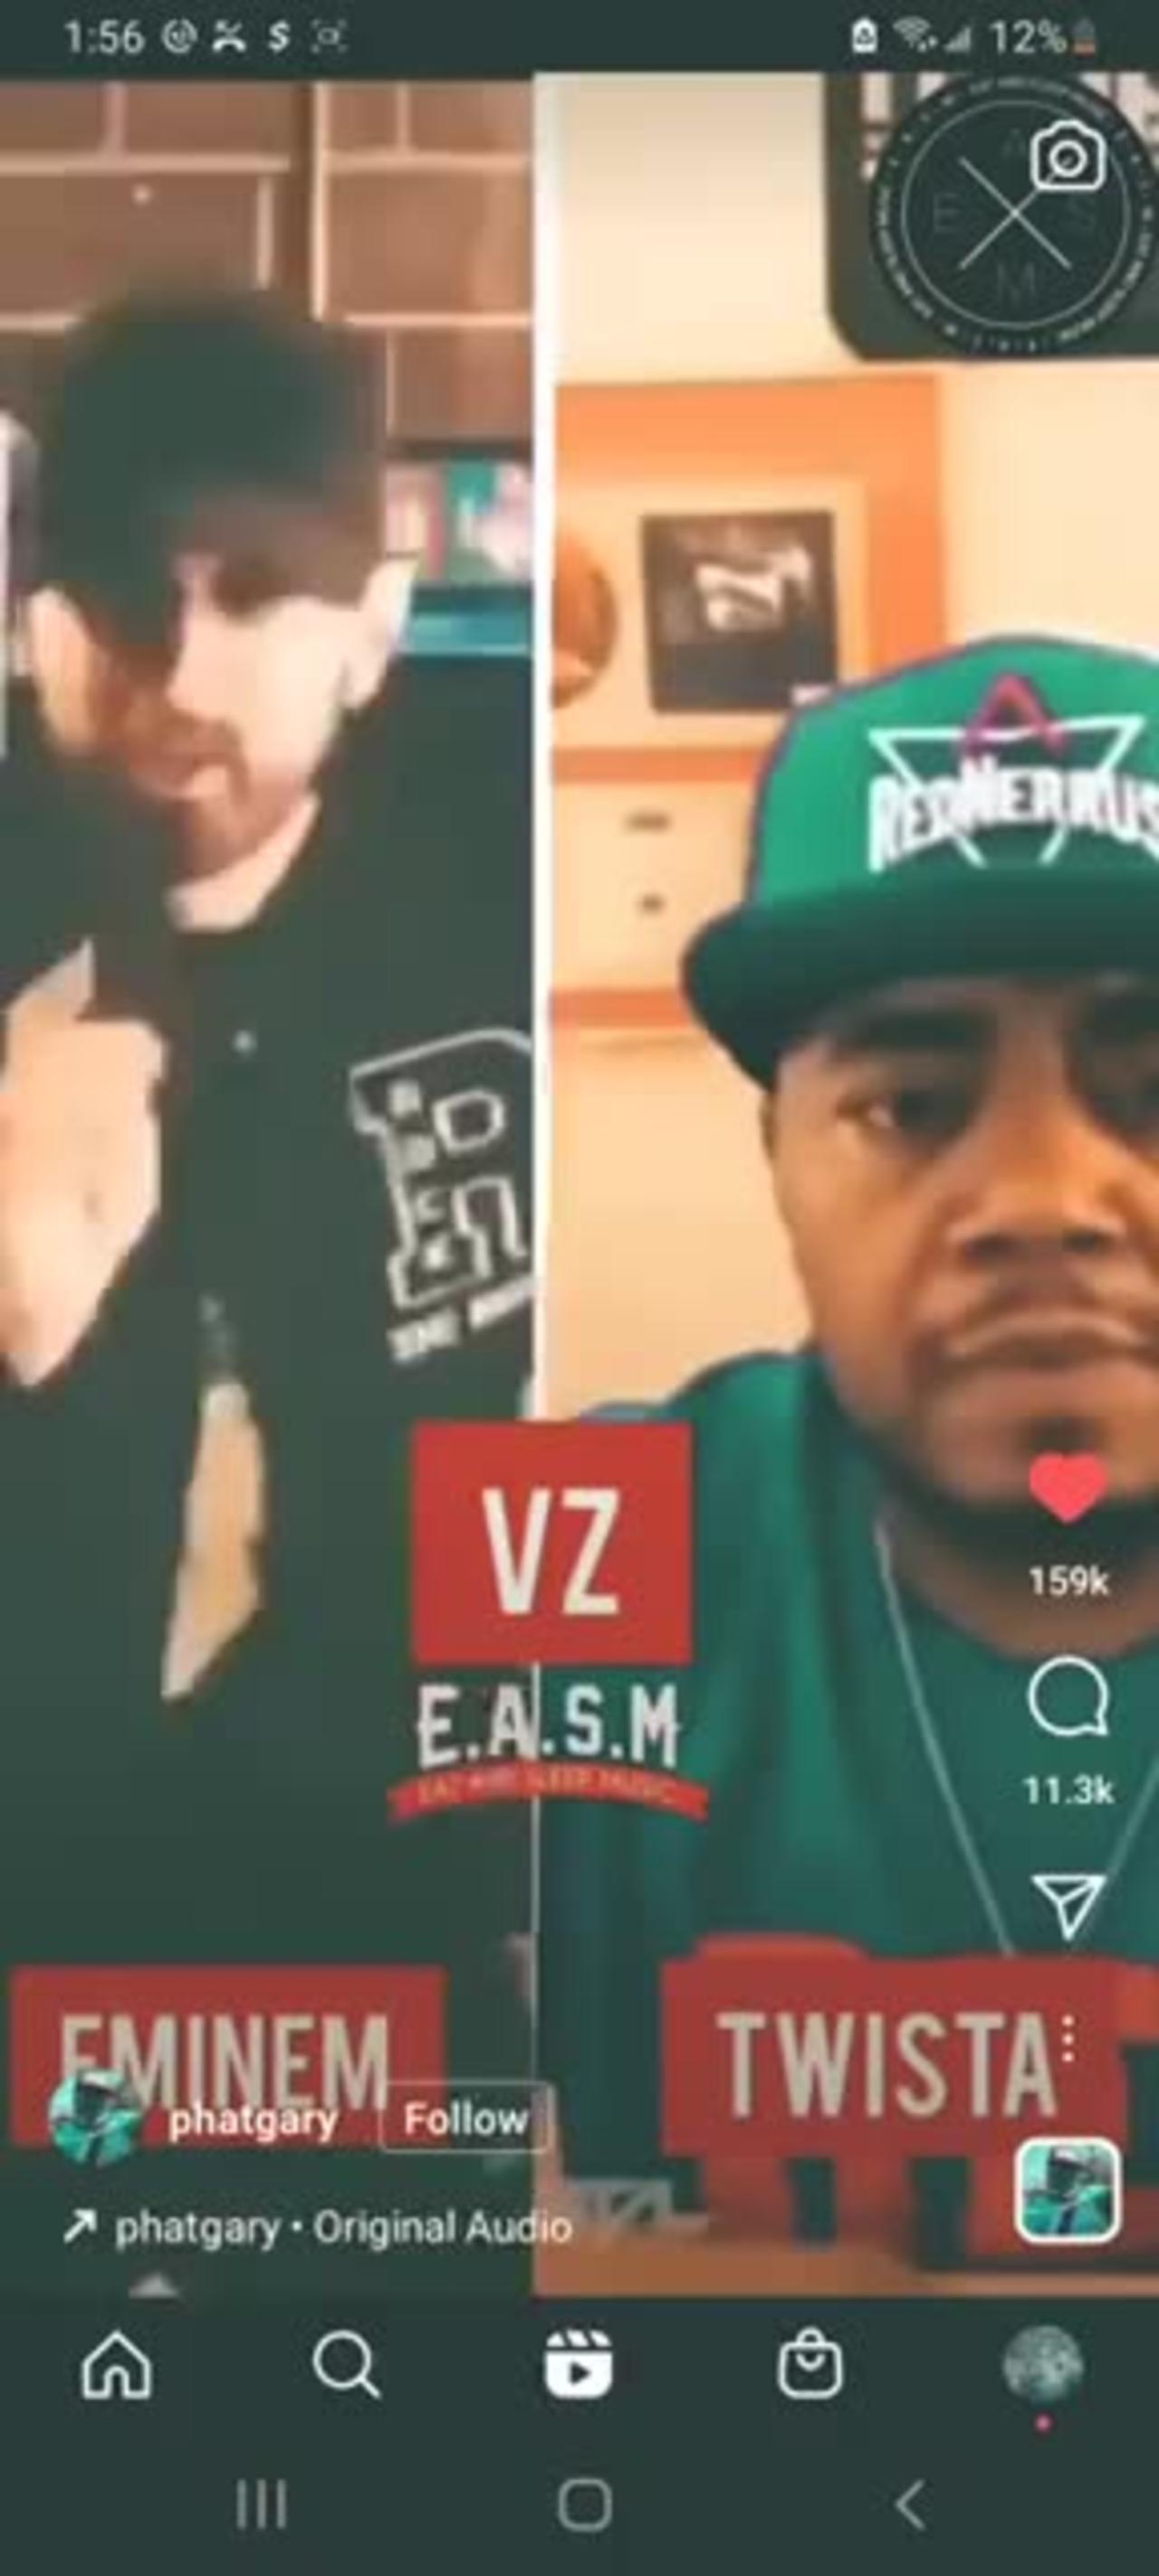 Eminem vs twista who will win